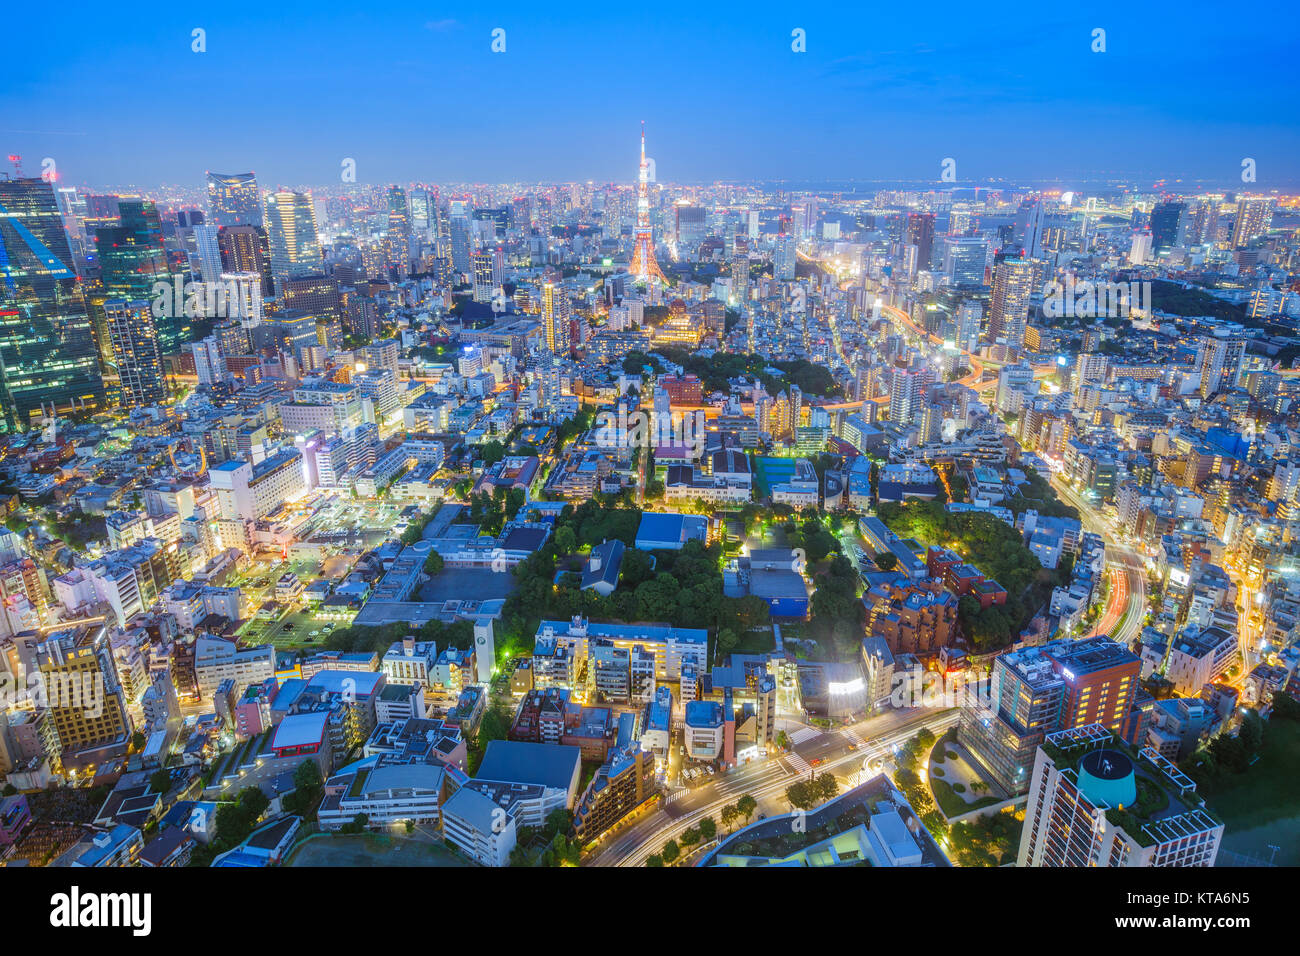 night view of Tokyo city, Japan Stock Photo